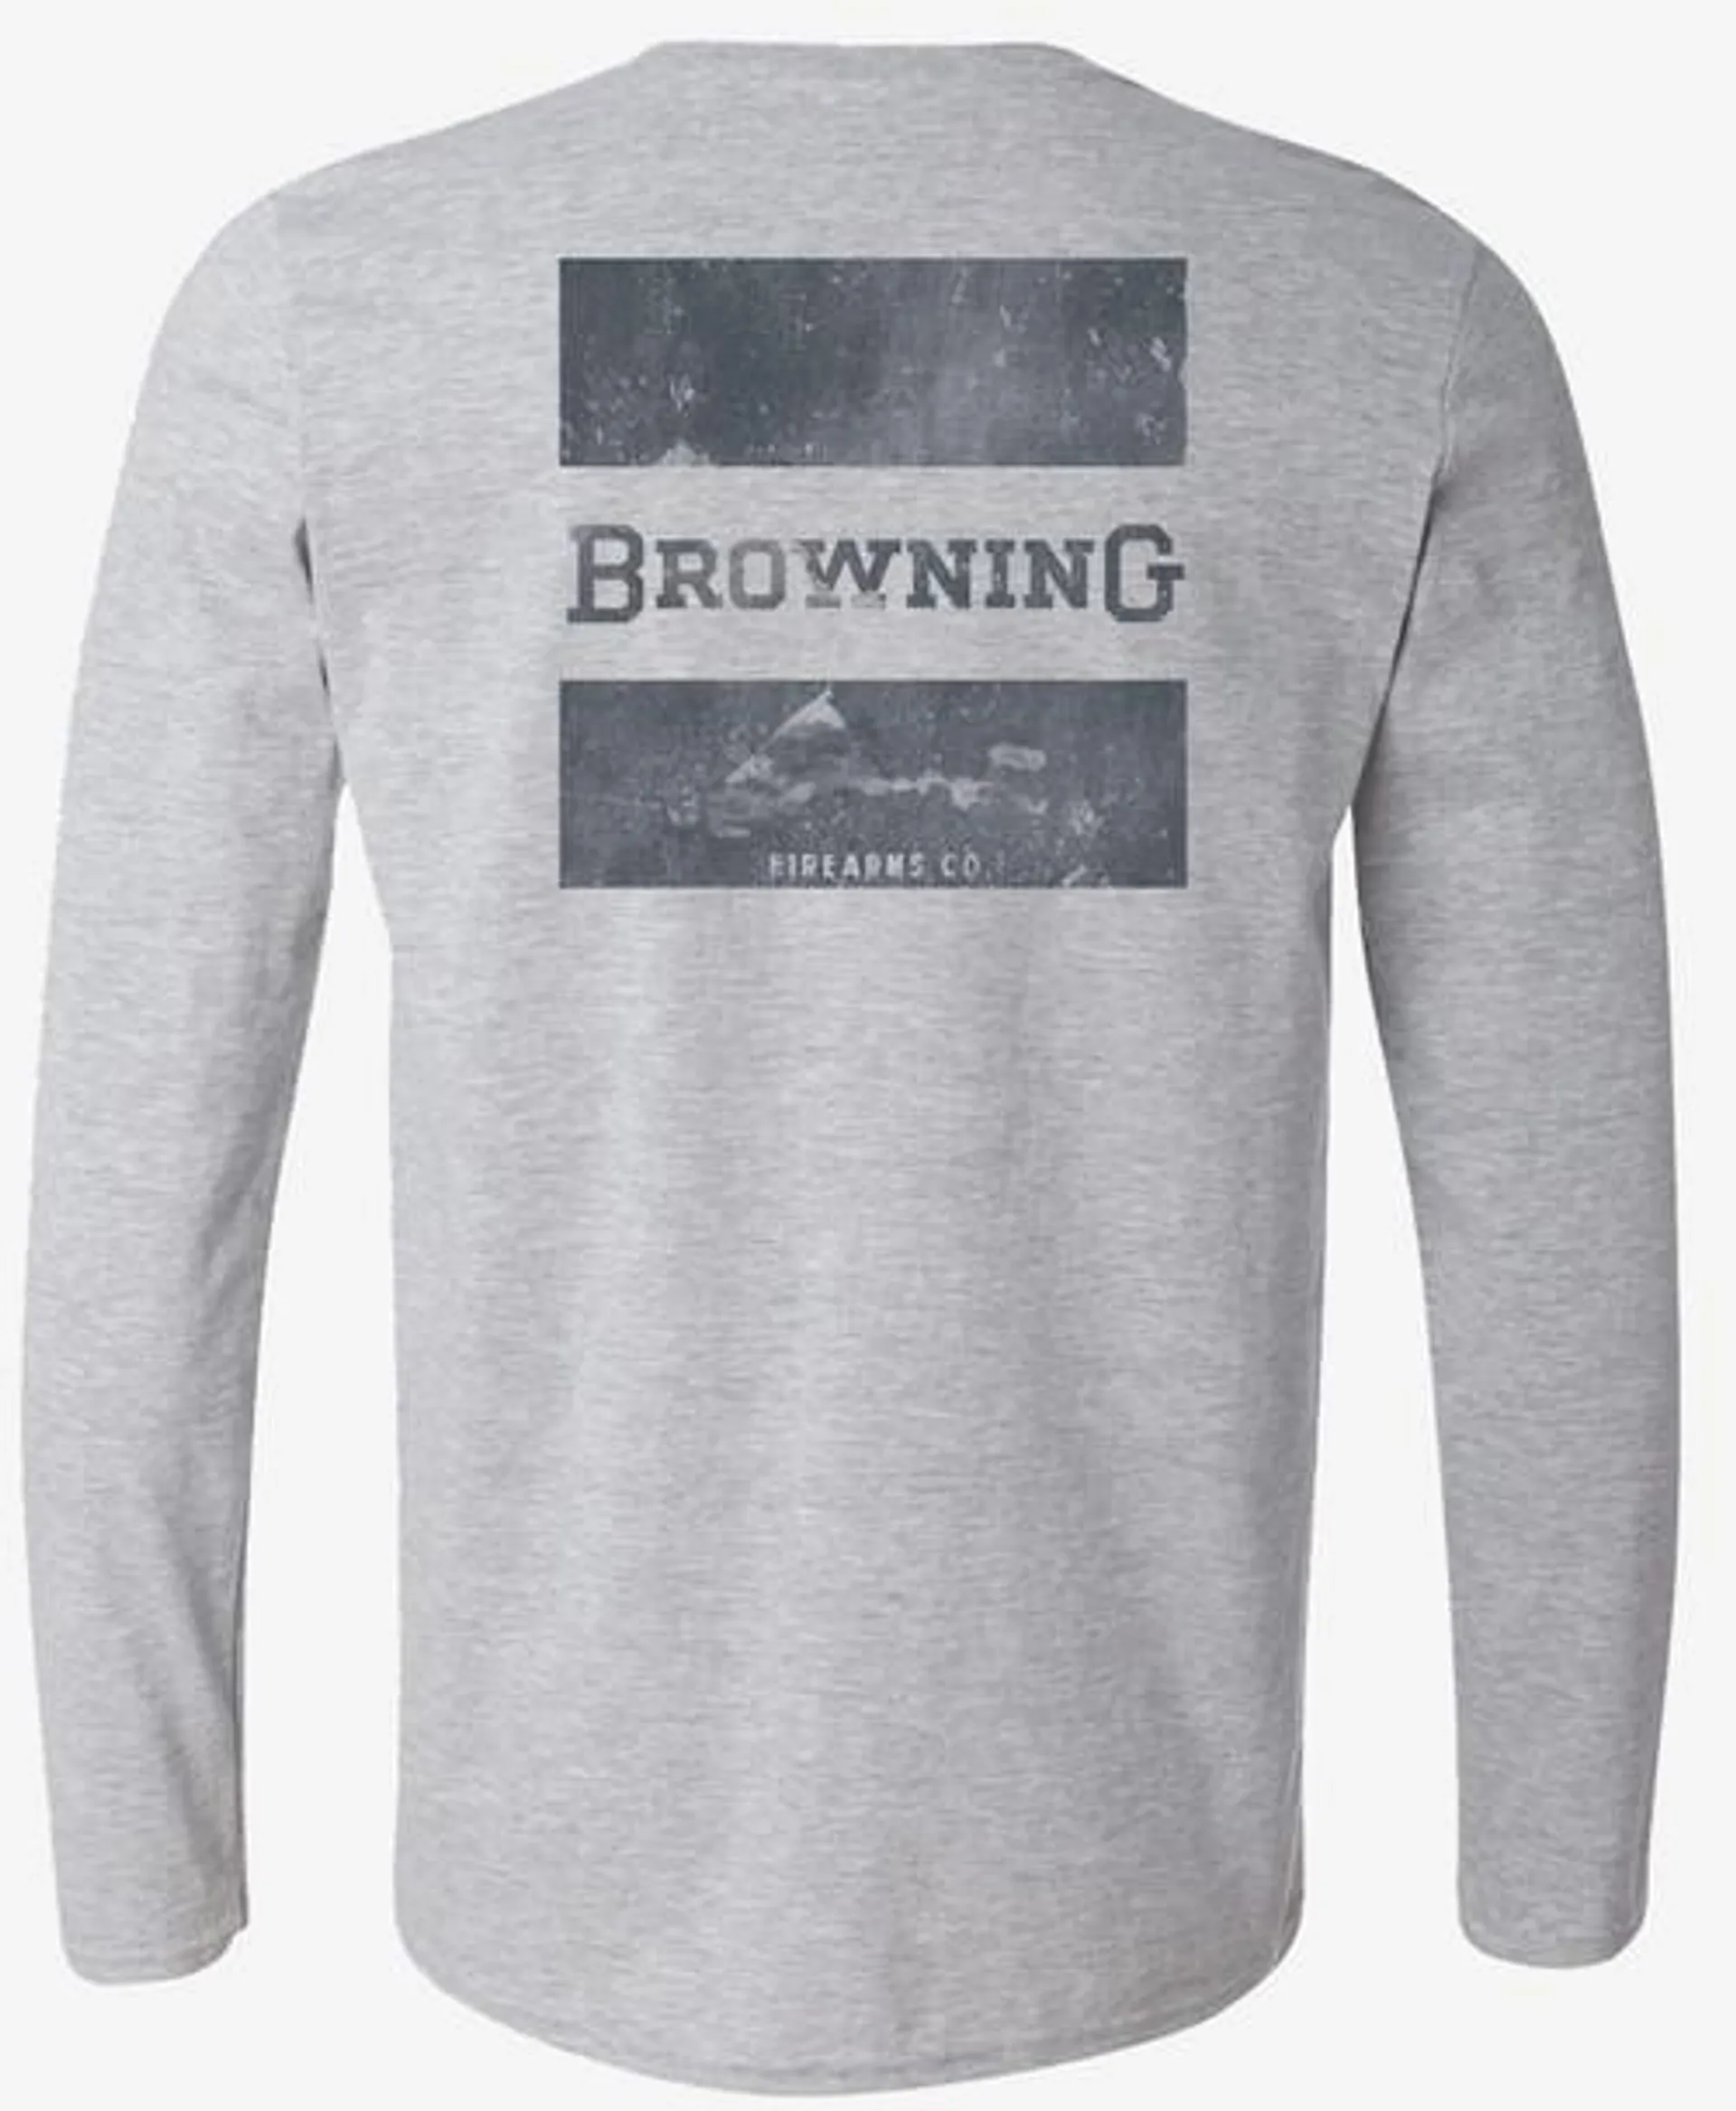 Browning Mens Heather Grey Box Firearms Co. Long Sleeve T-Shirt